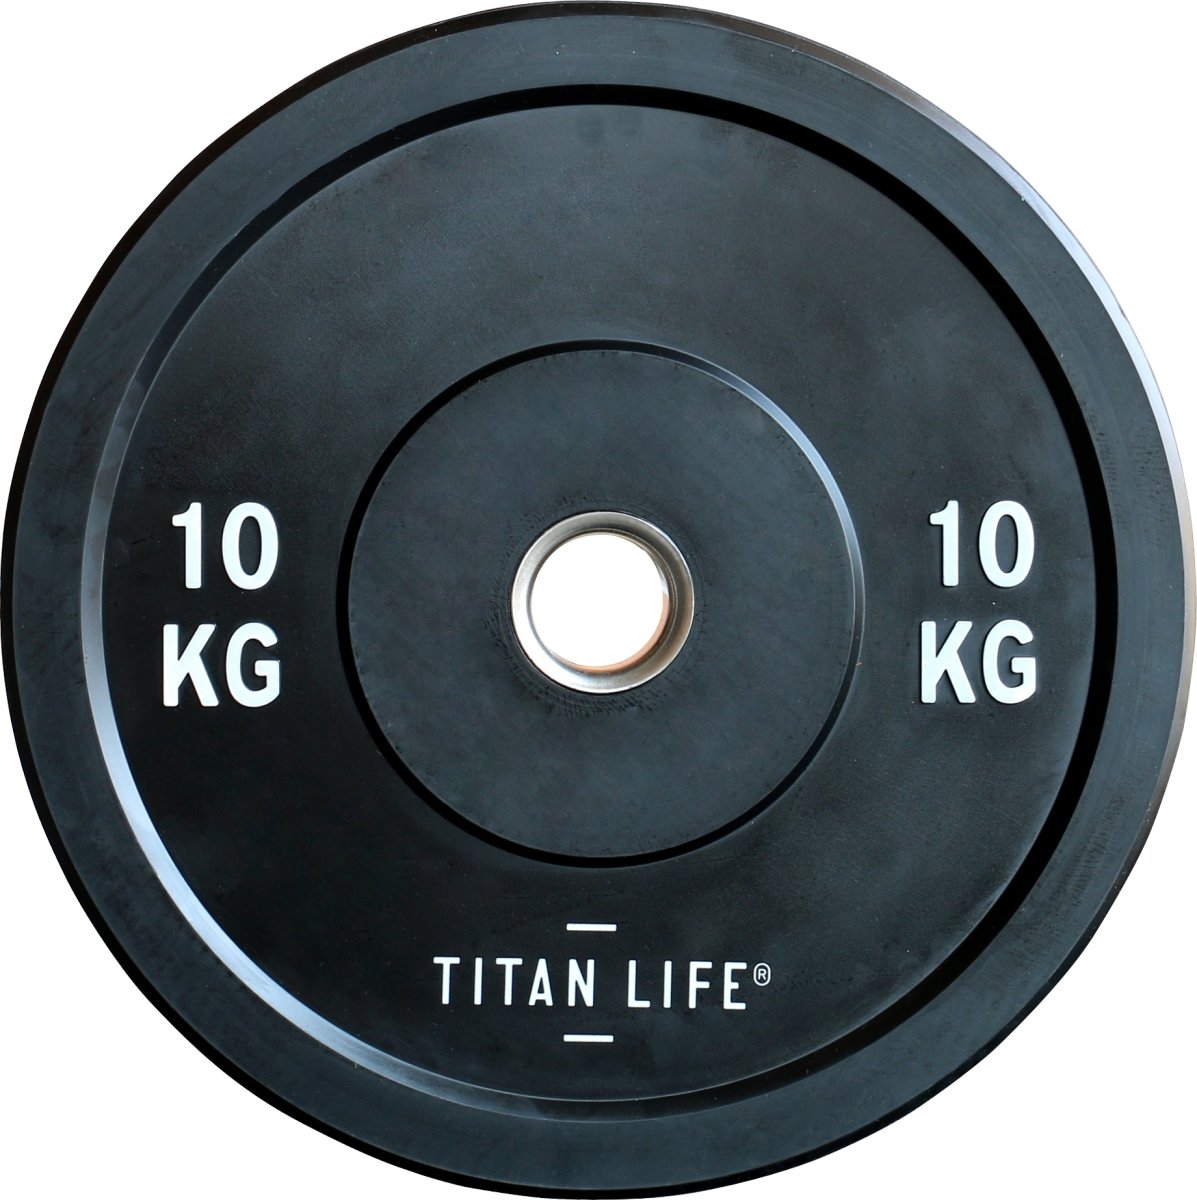 Titan Life Rubber Bumper Plate 10 kg